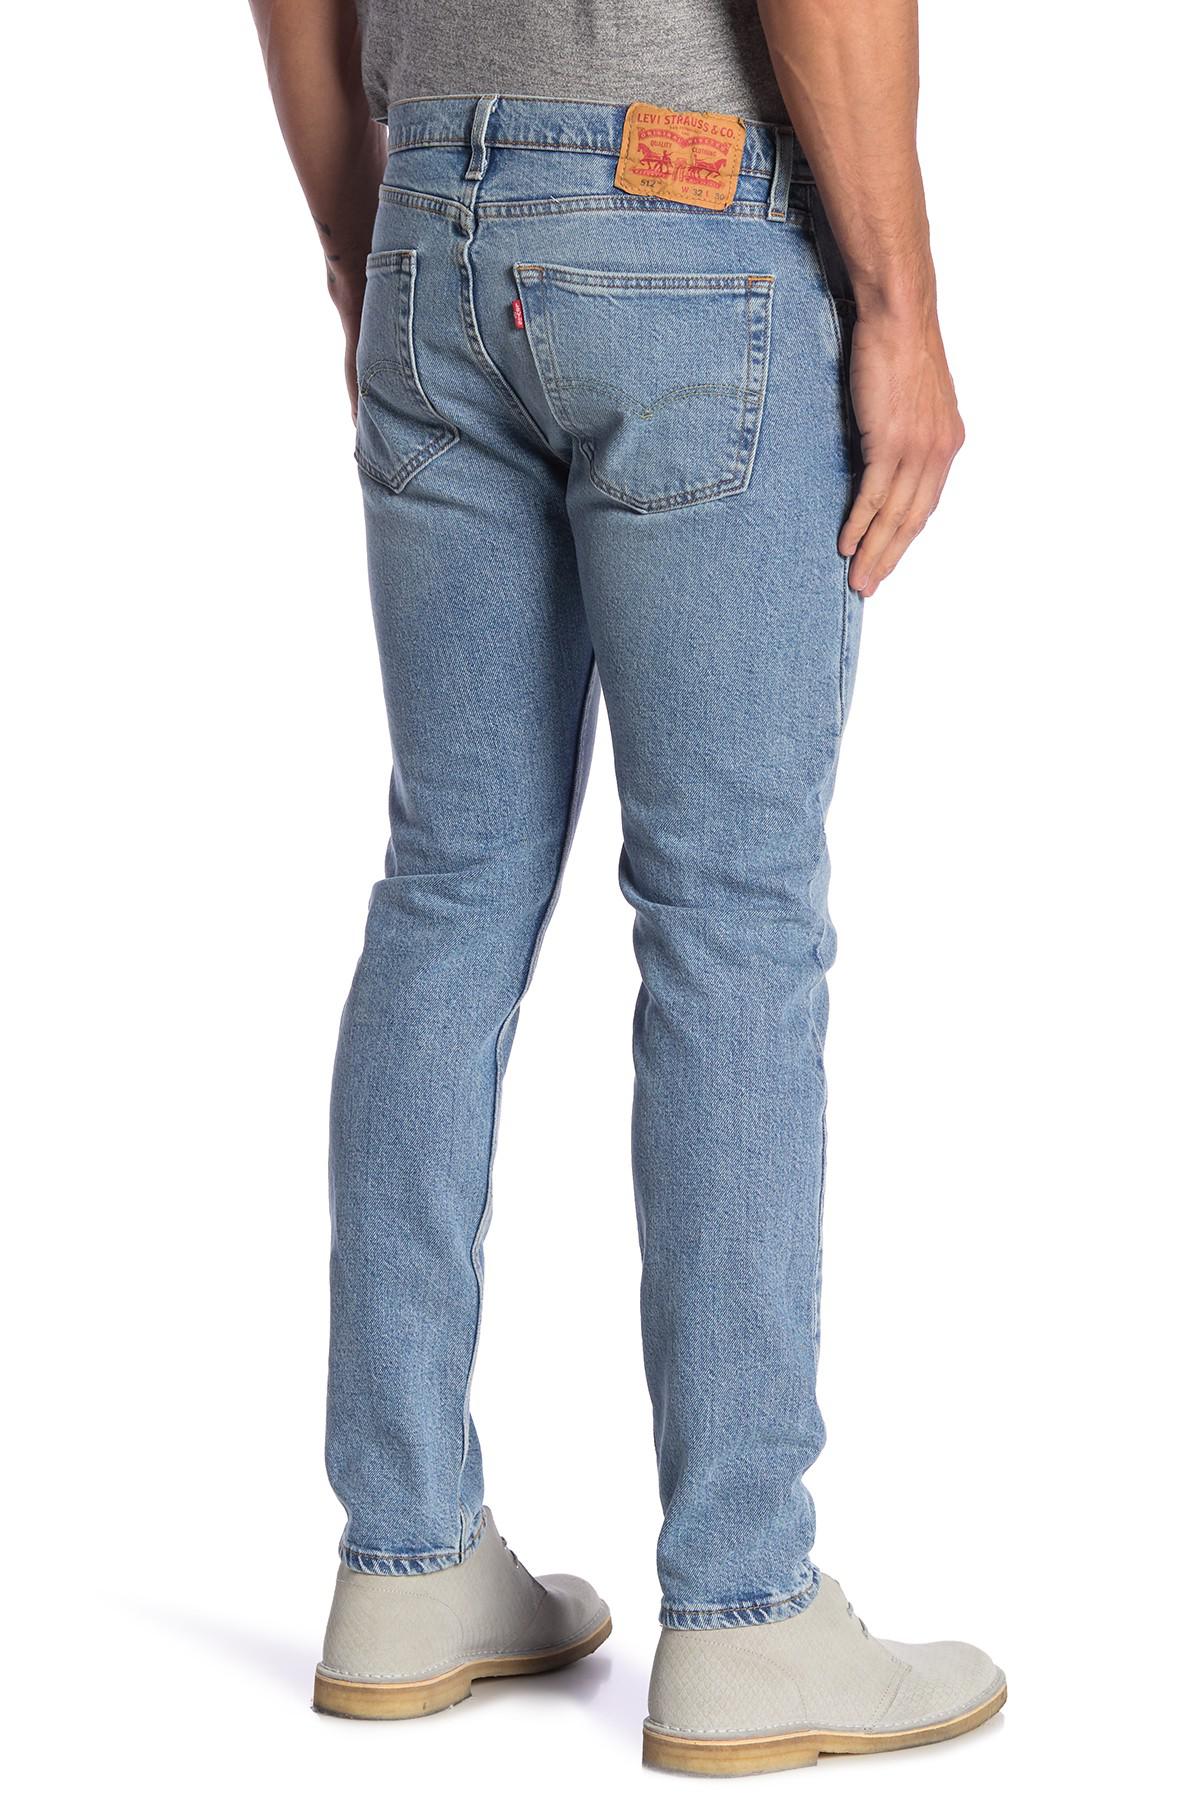 Levi's Denim 512 Slim Taper Fit Jeans - 29-36" Inseam in Blue for Men - Lyst